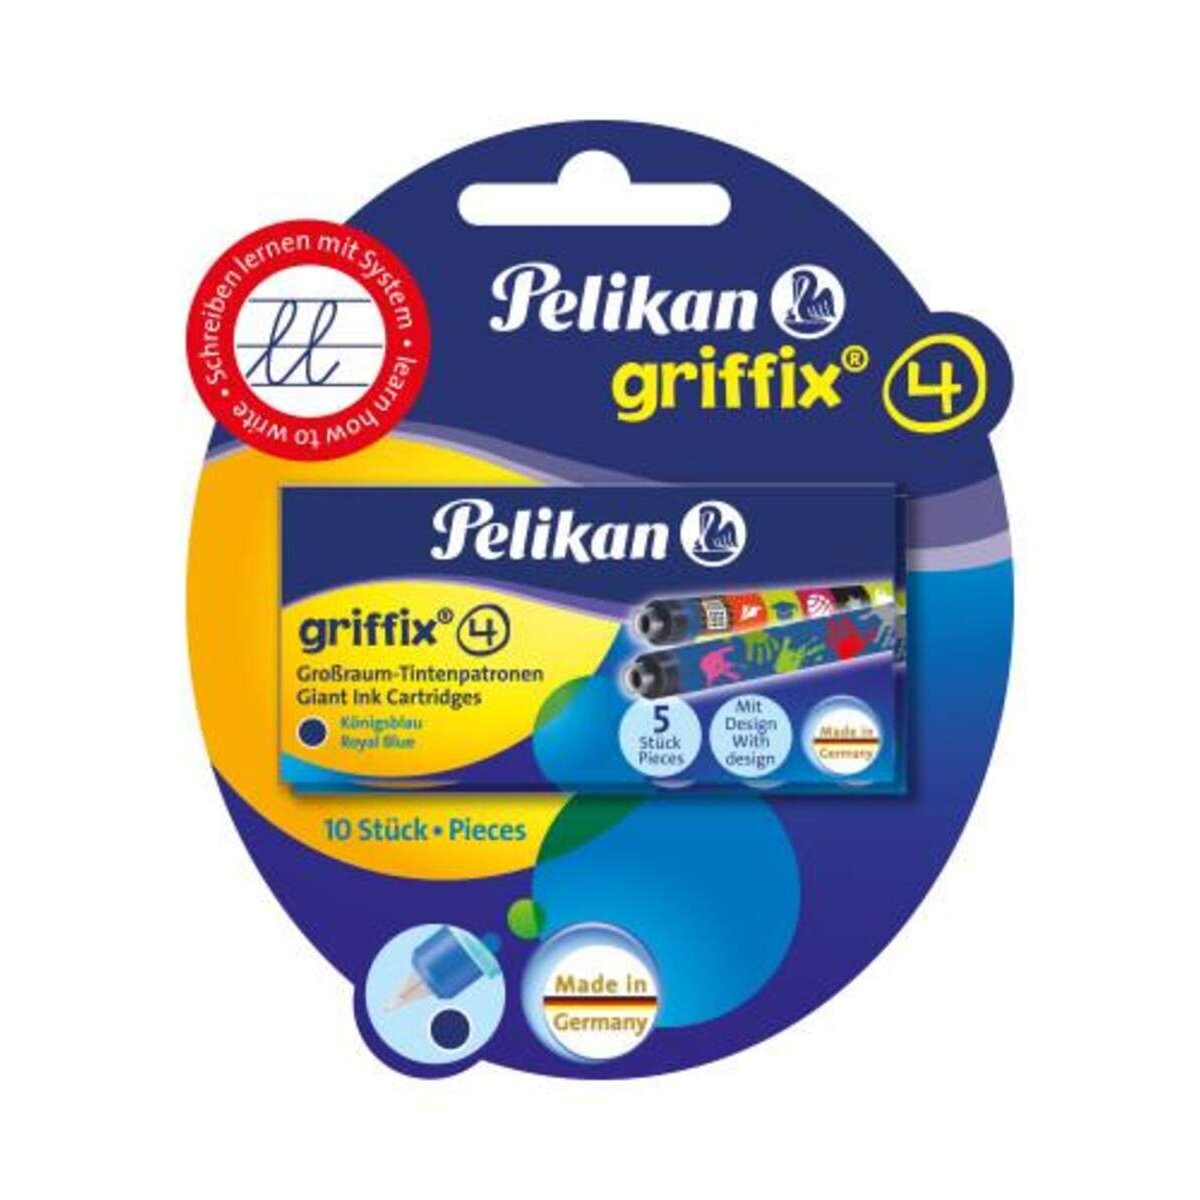 Pelikan griffix® Tintenpatronen mit 2 x 5 bunt bedruckten Großraum-Patronen Königsblau